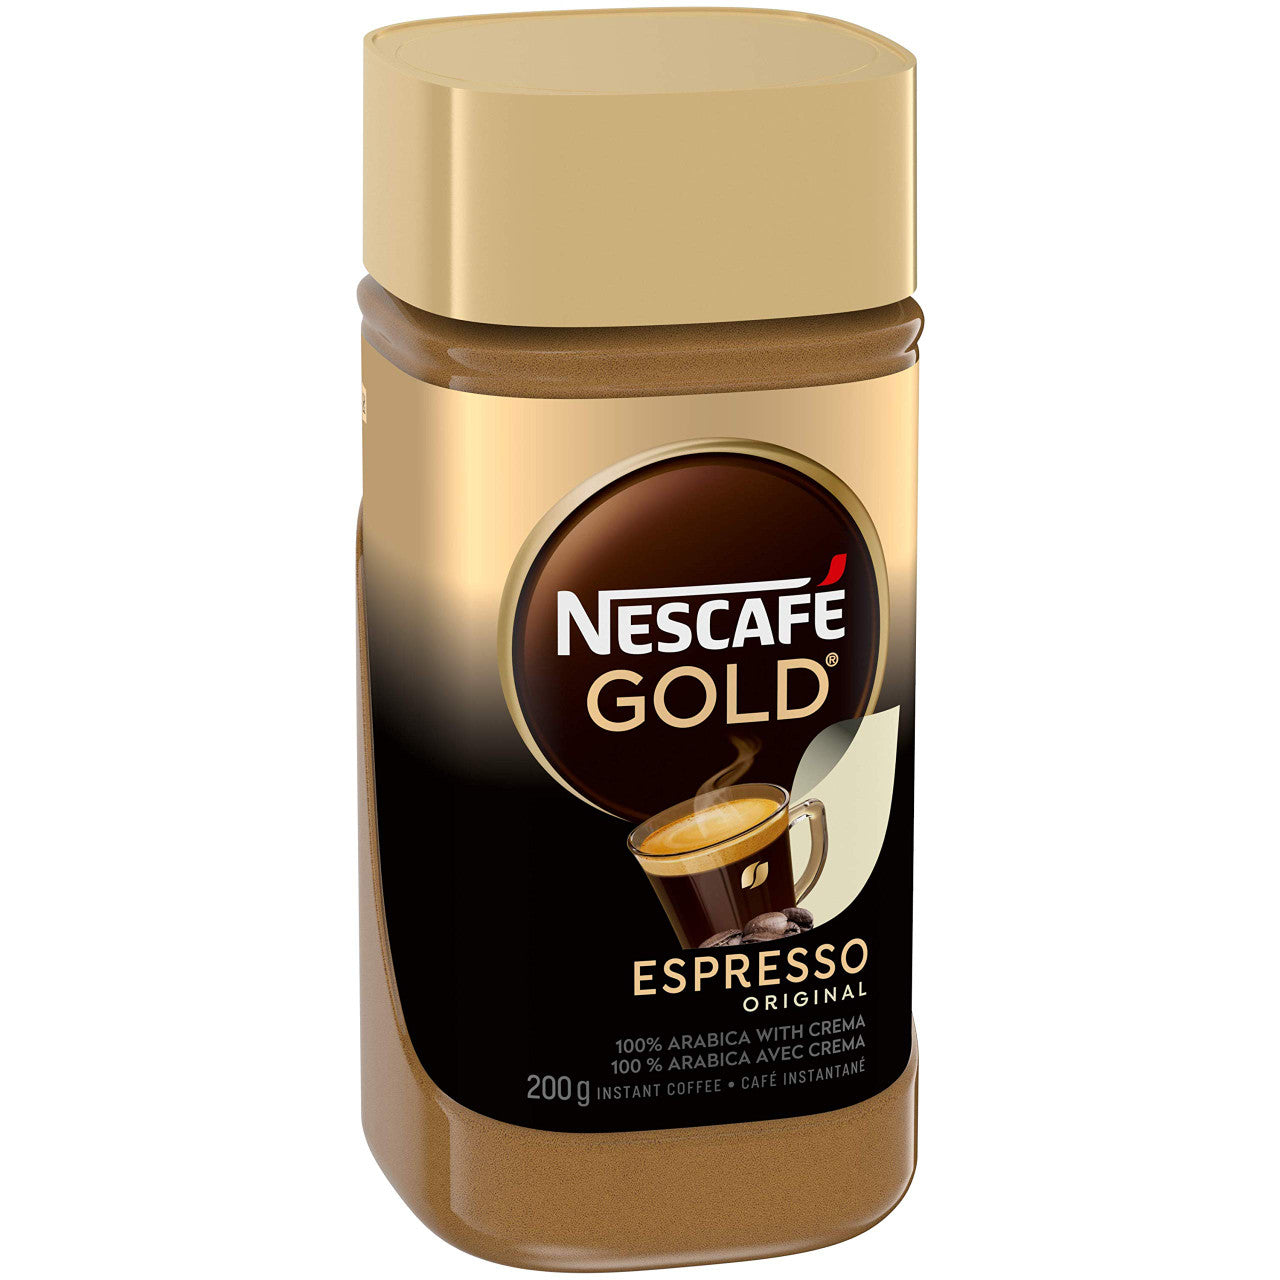 NESCAFE Gold Espresso Instant Coffee, 200g/7.1 oz., {Imported from Canada}